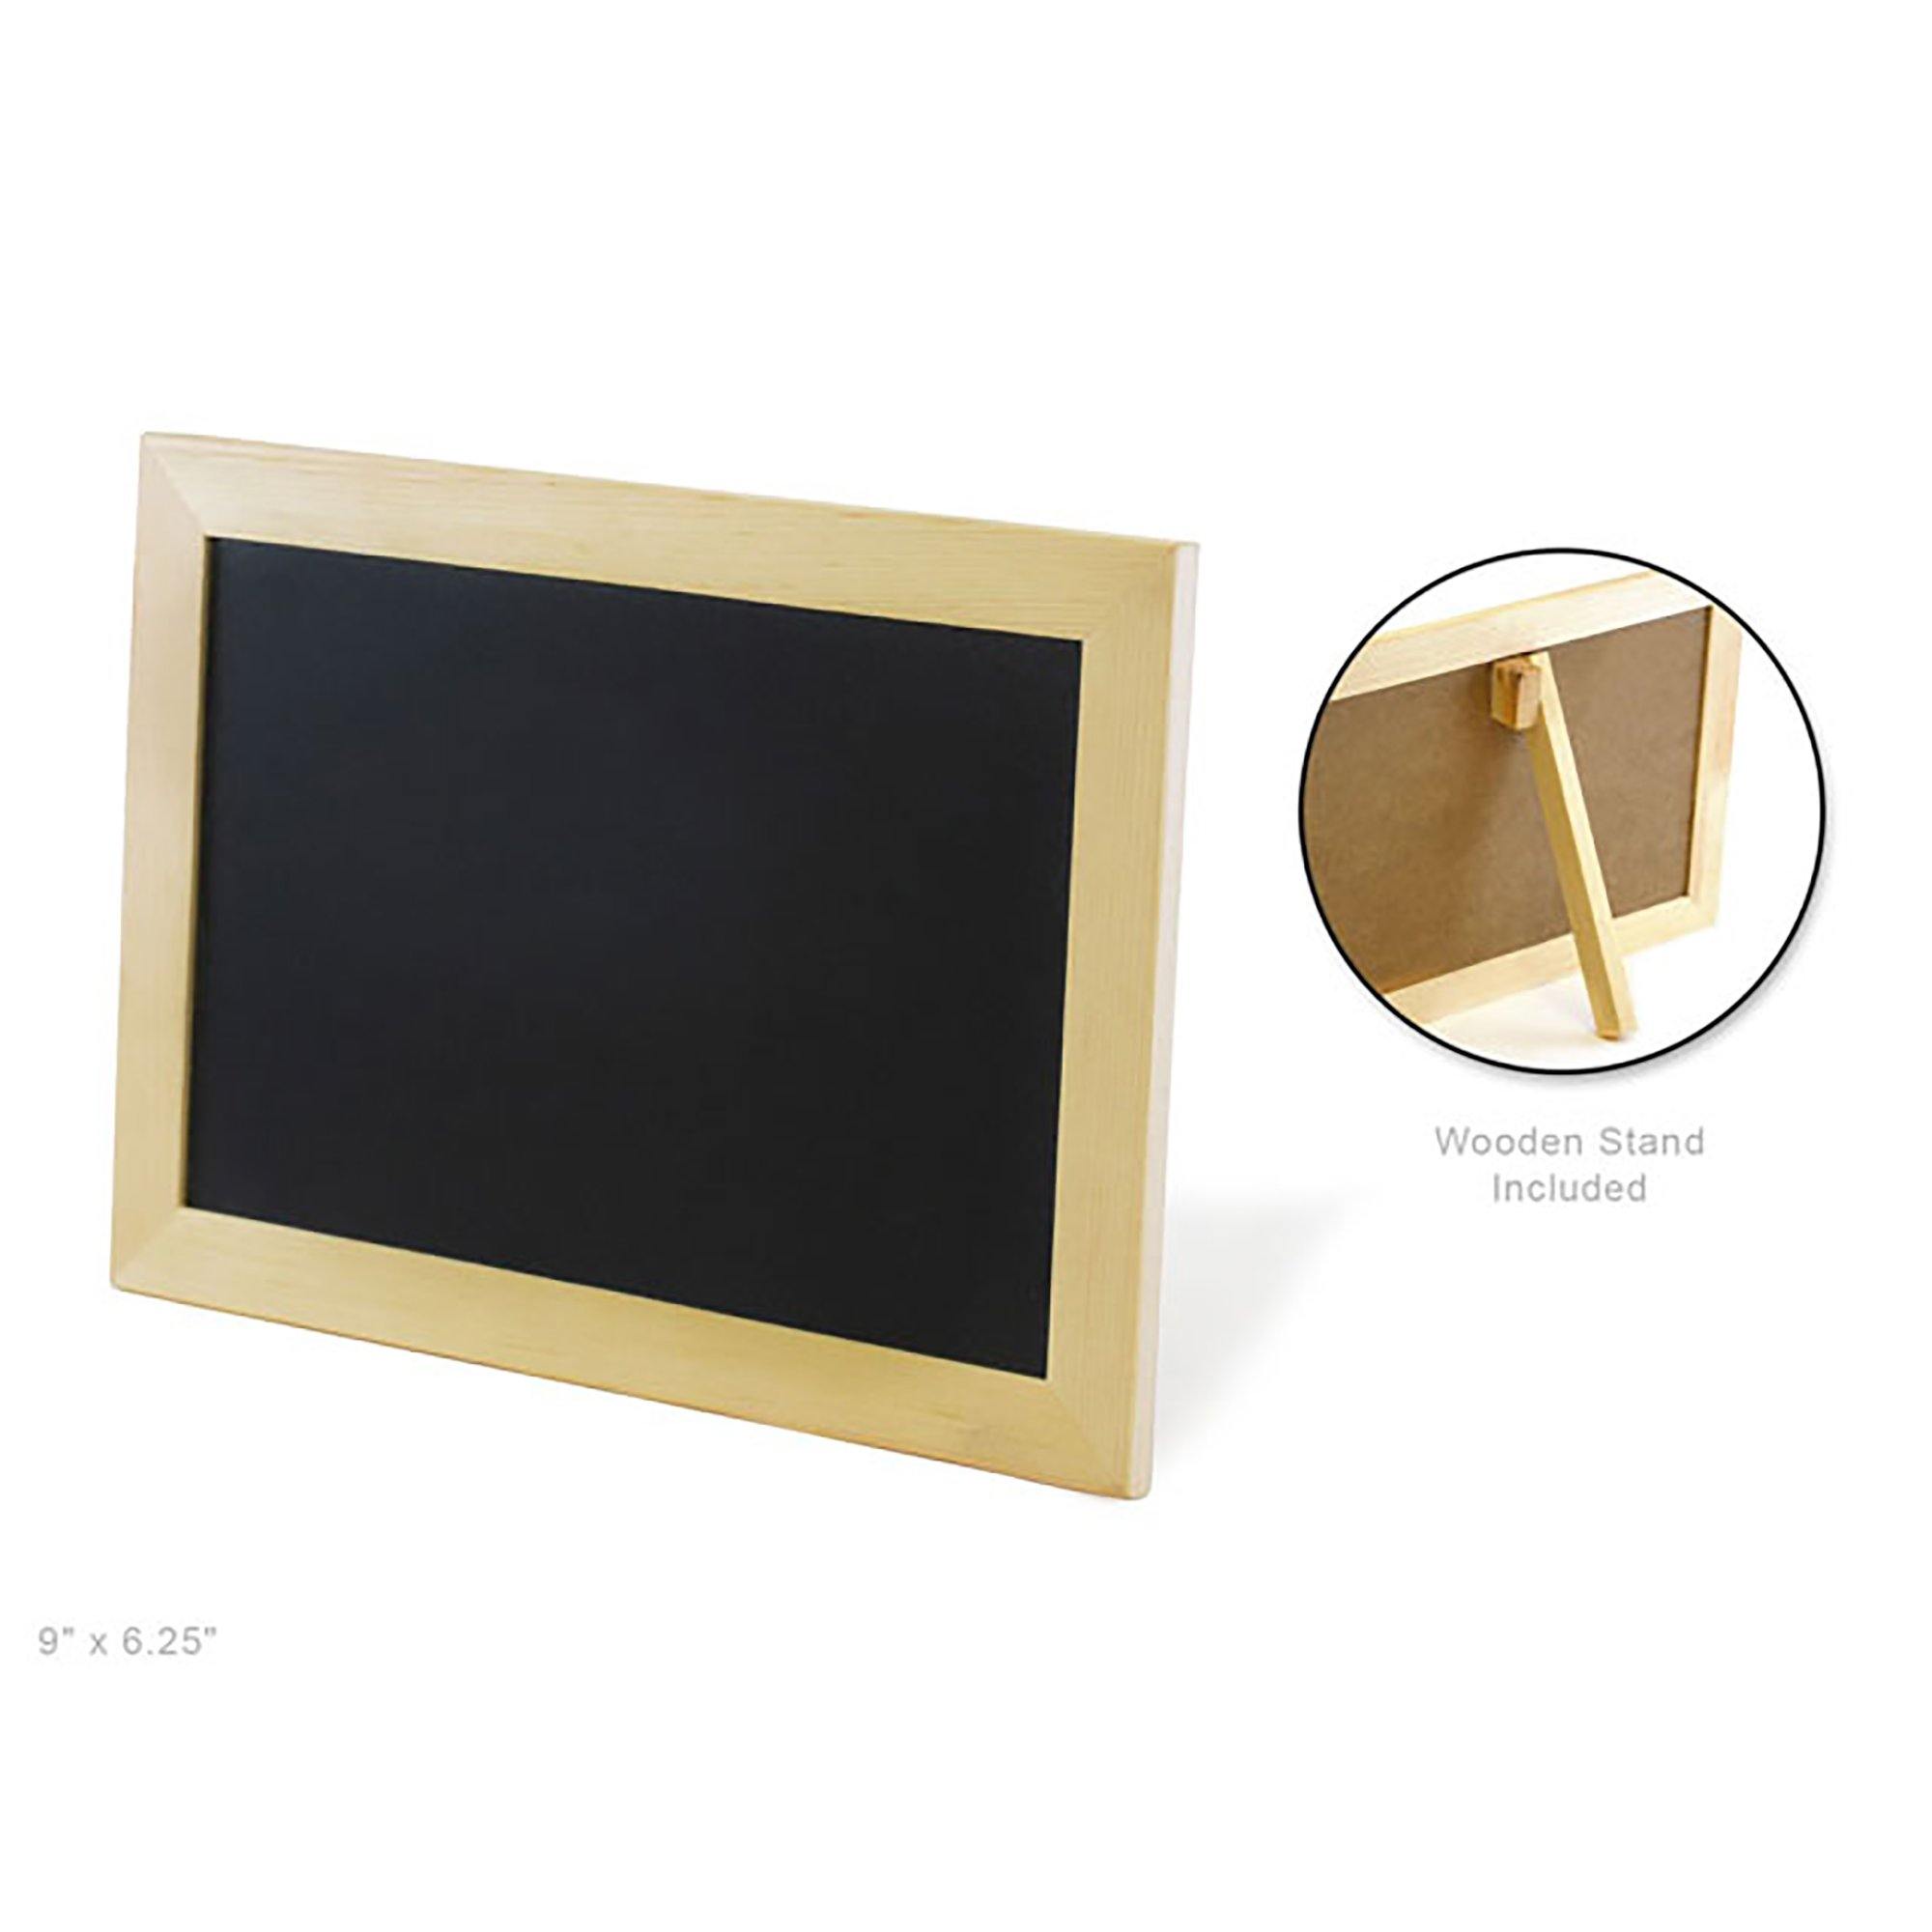 Wood Craft: 9"X6.25" Natural Diy Chalkboard Frame W/Stand - Dollar Max Dépôt